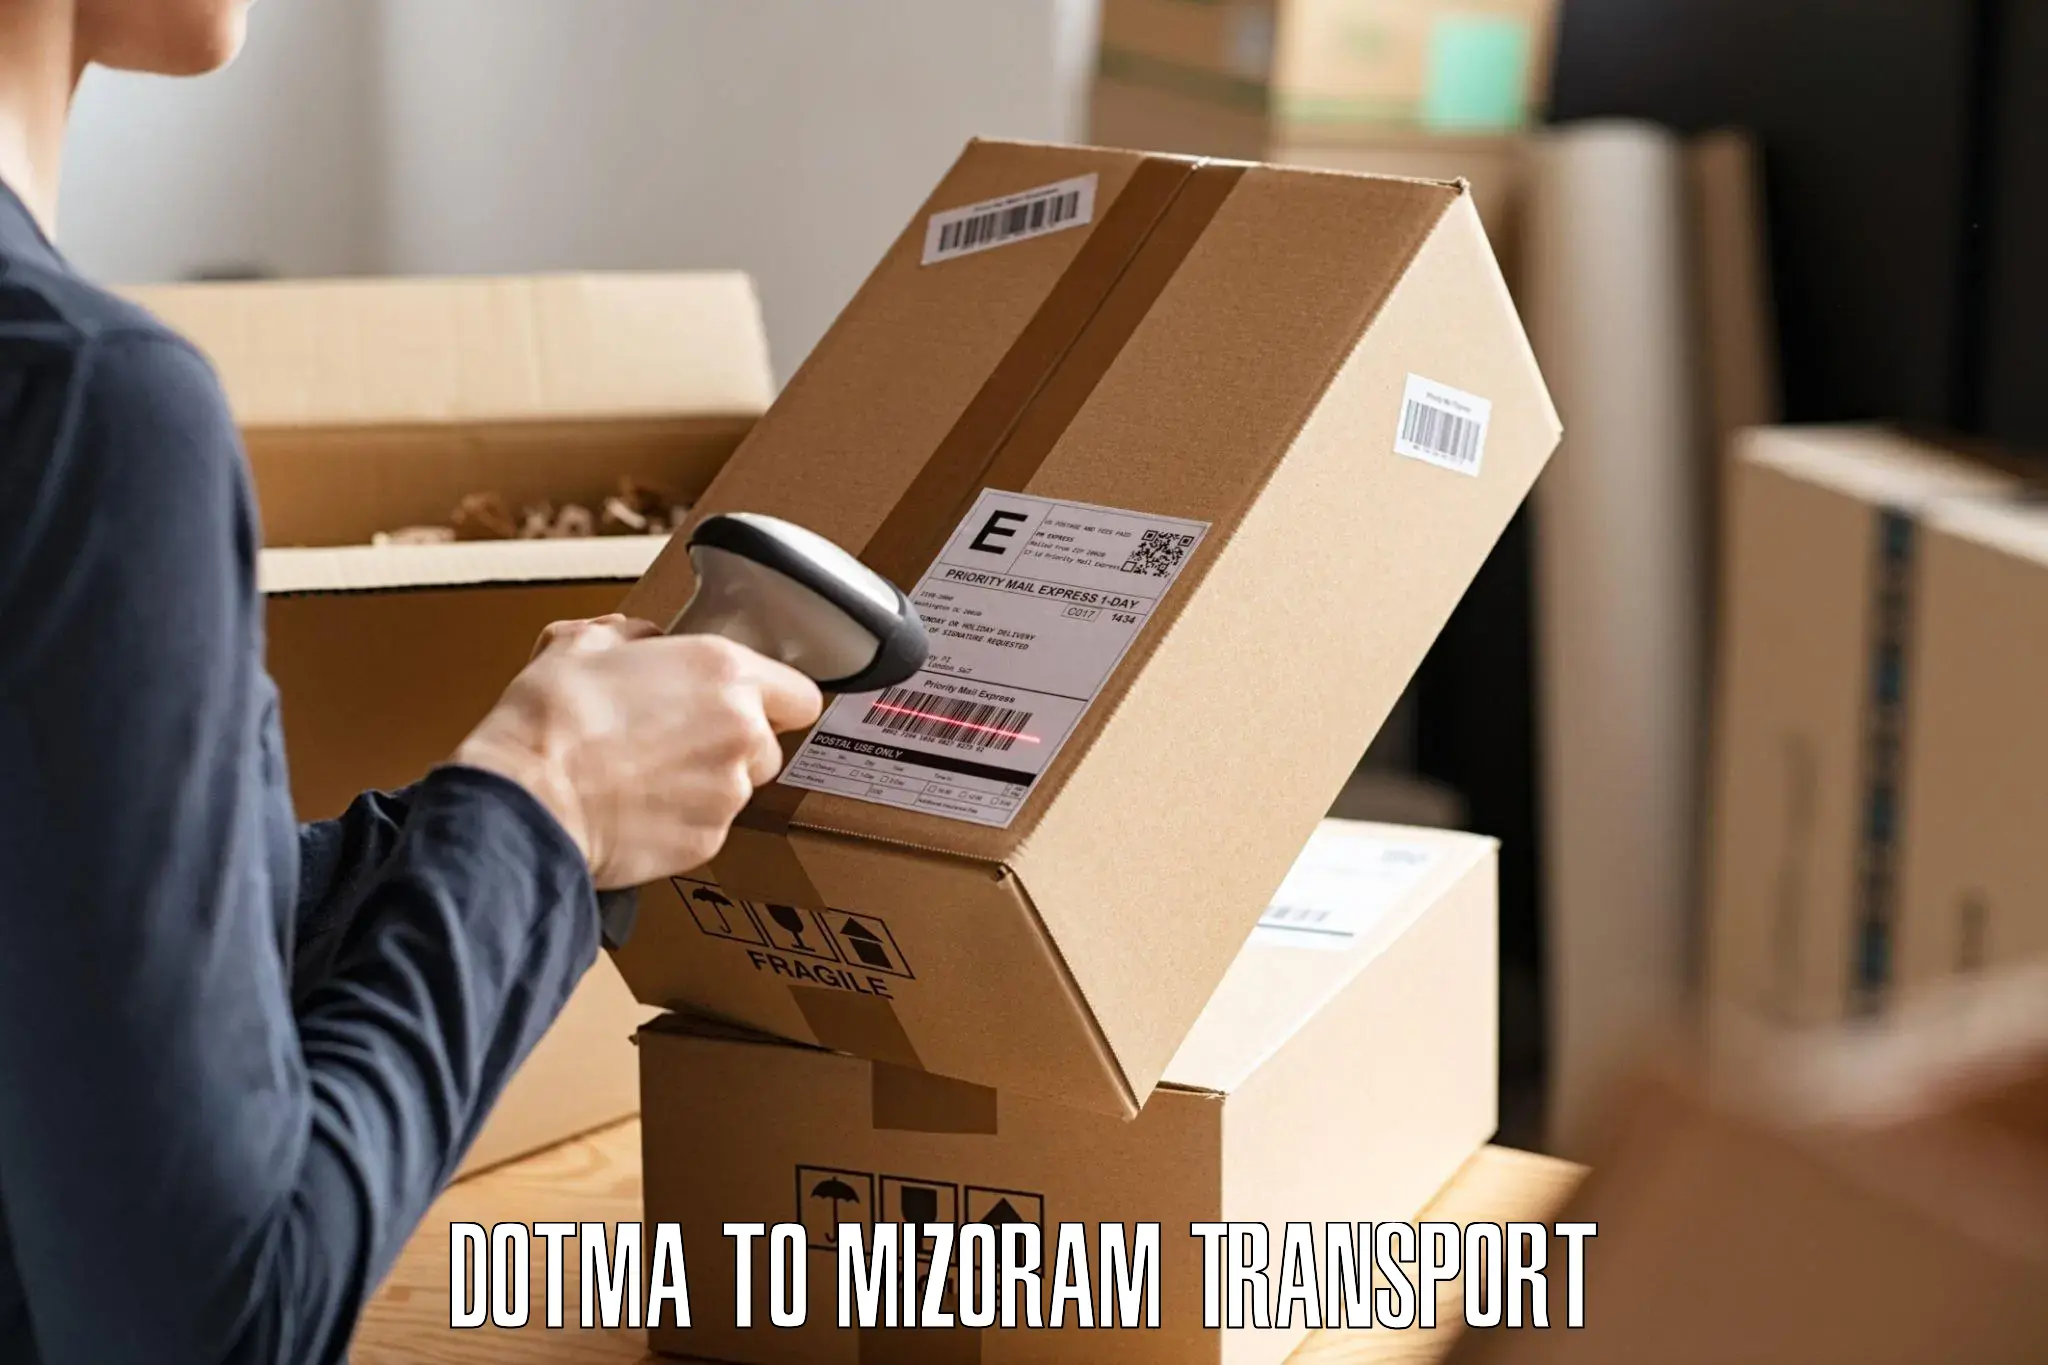 Shipping partner Dotma to Darlawn